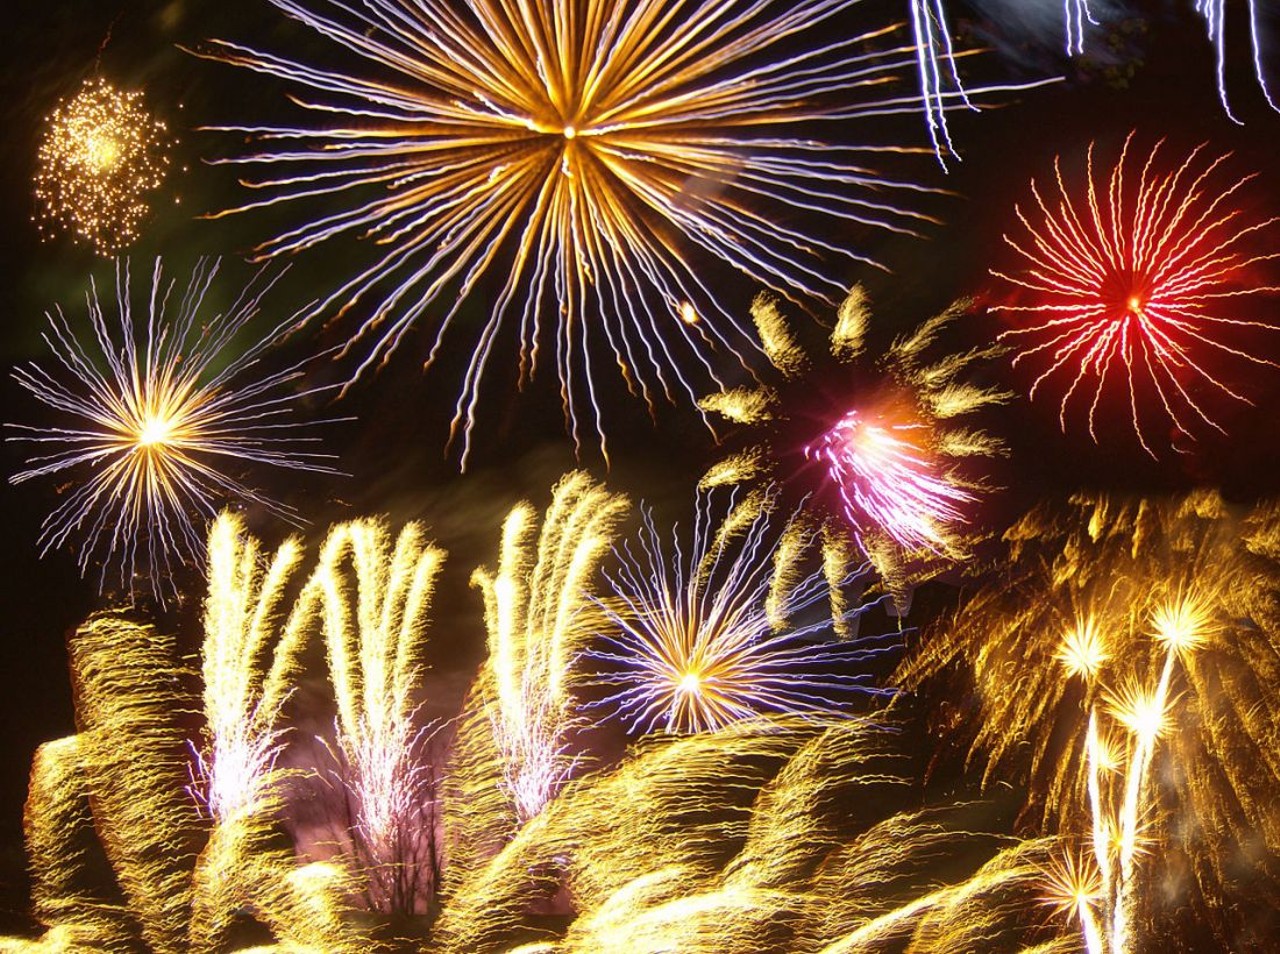 Handel's Royal Fireworks Music
Thursday, March 30
Wikipedia Photo